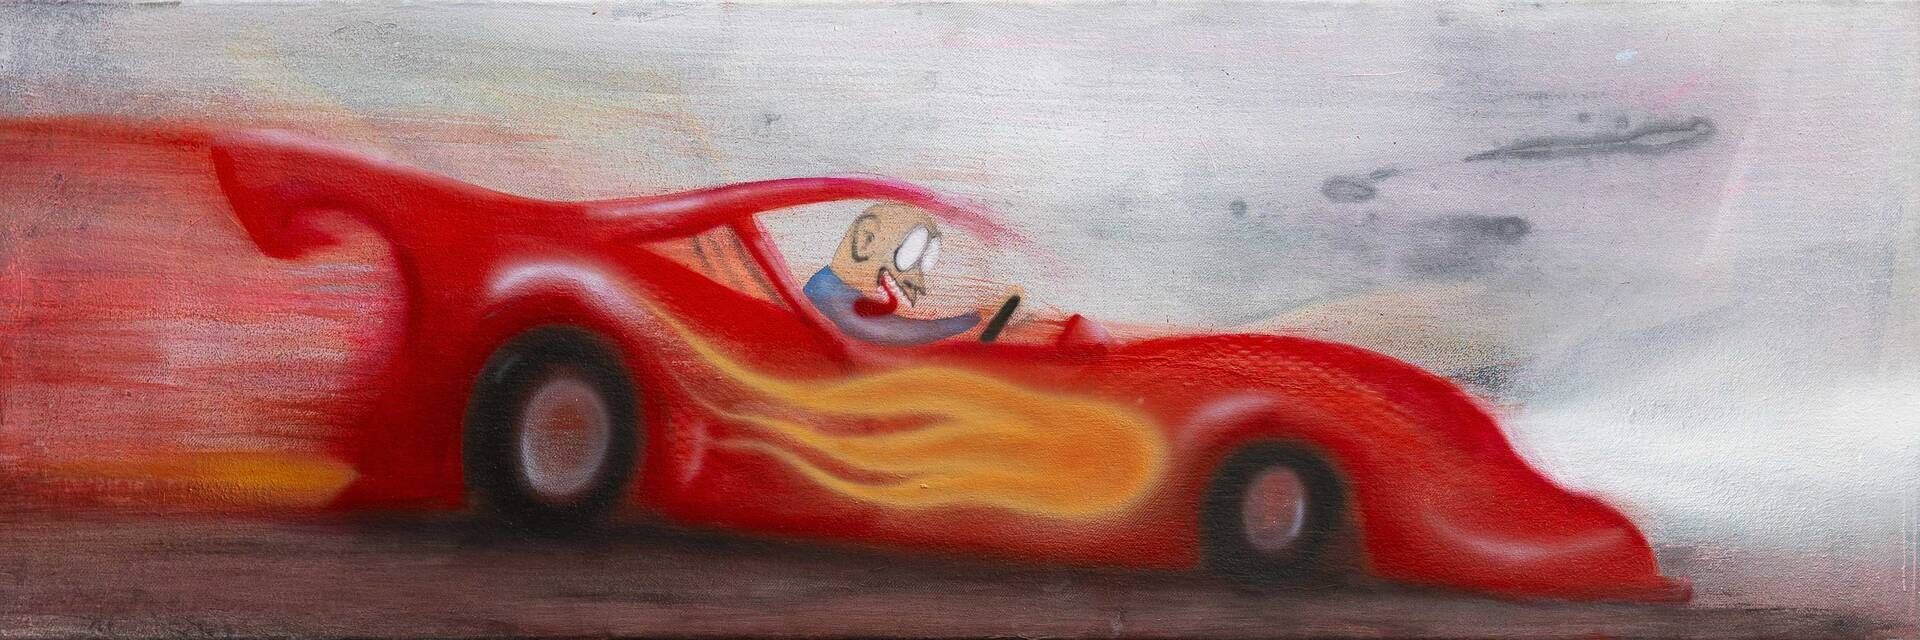 Red Racecar - Christian Rupp 1